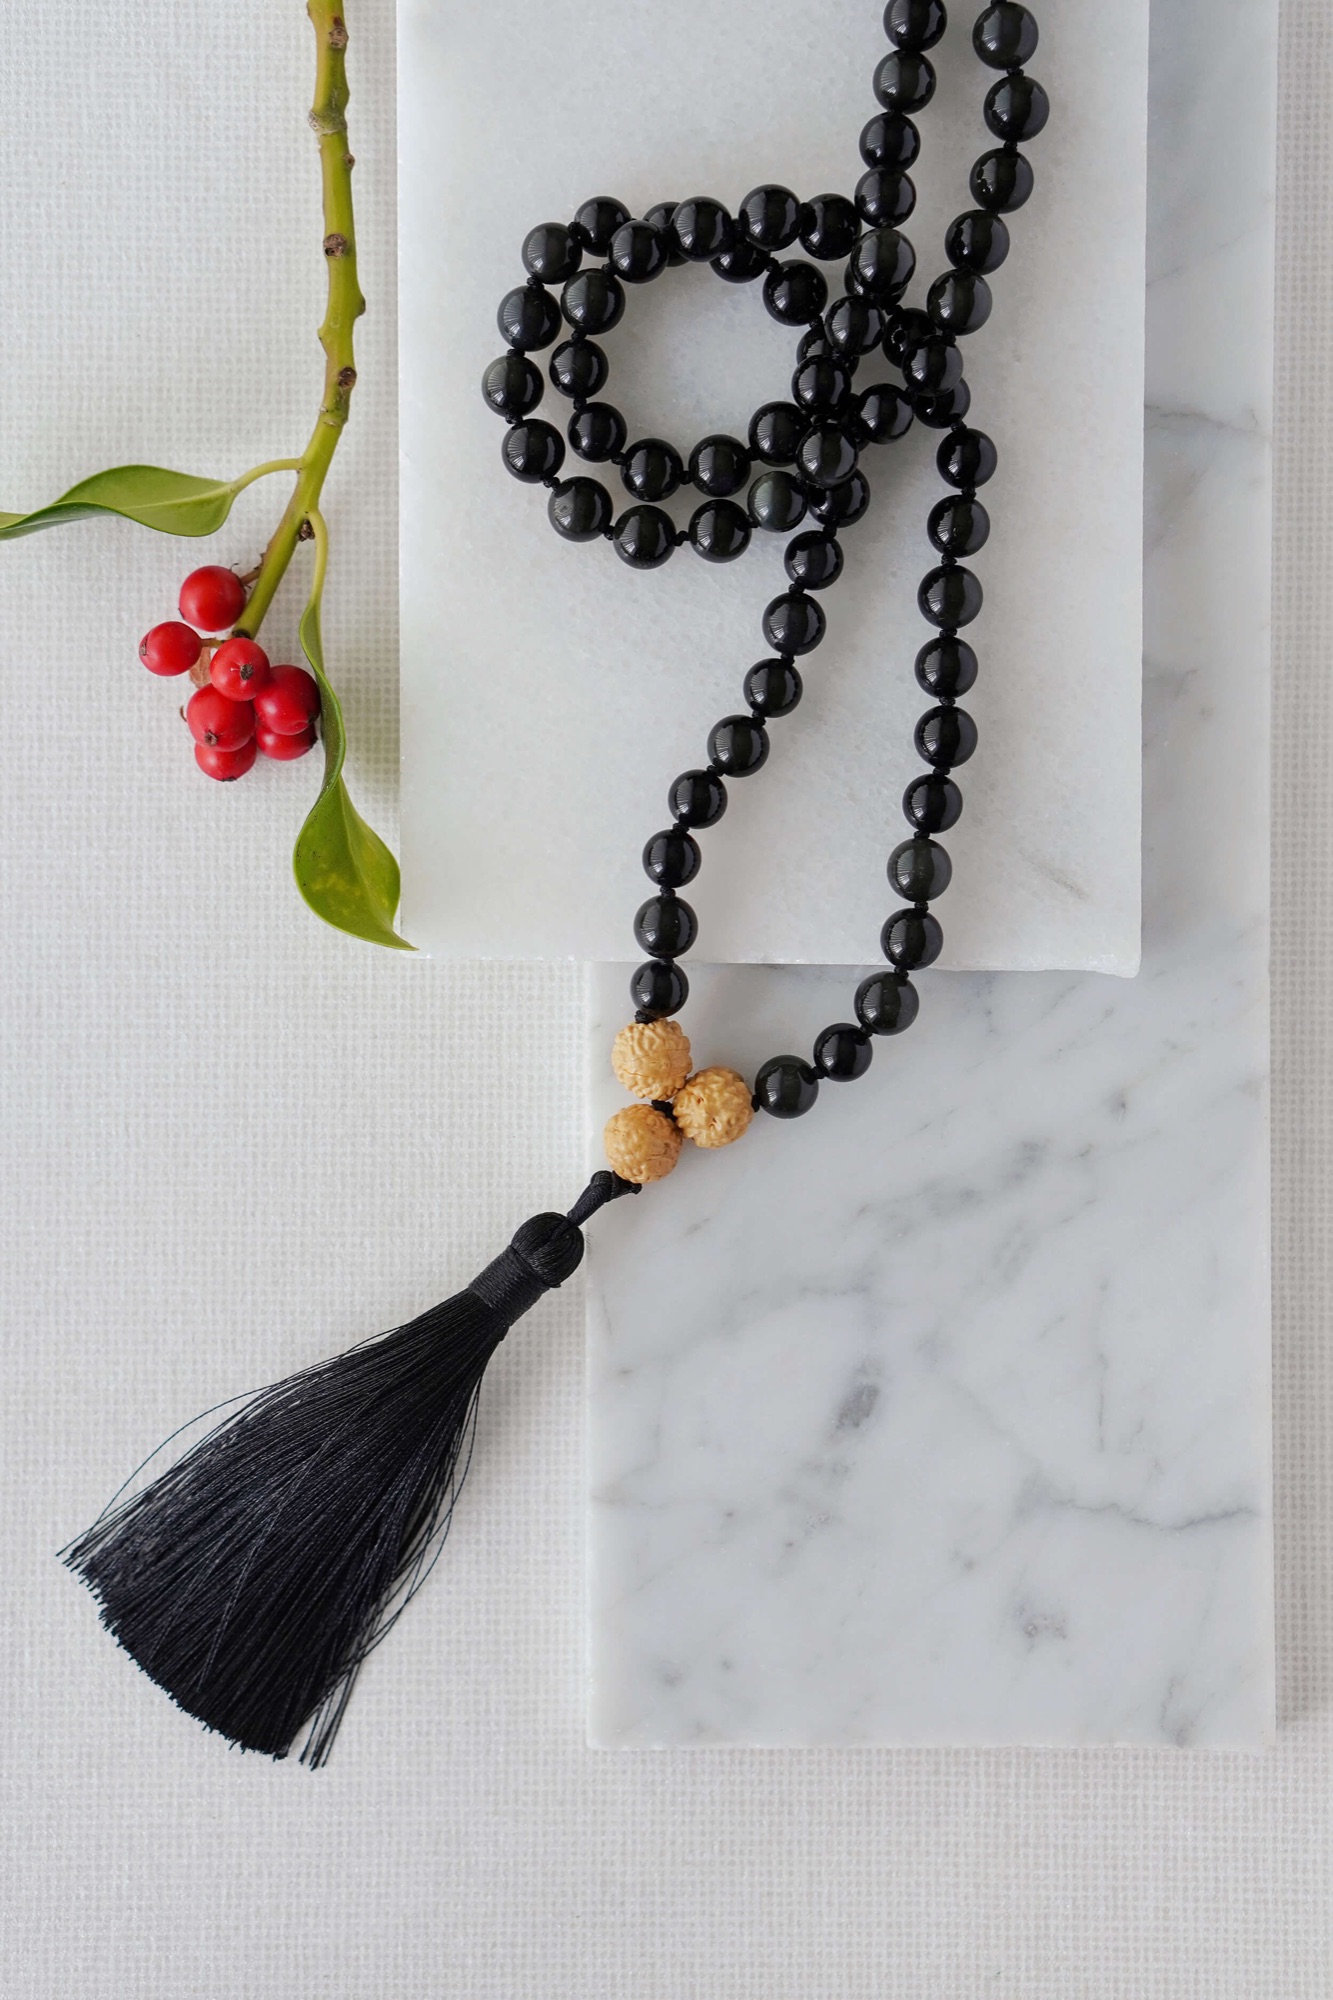 The 108 Mala bead necklace